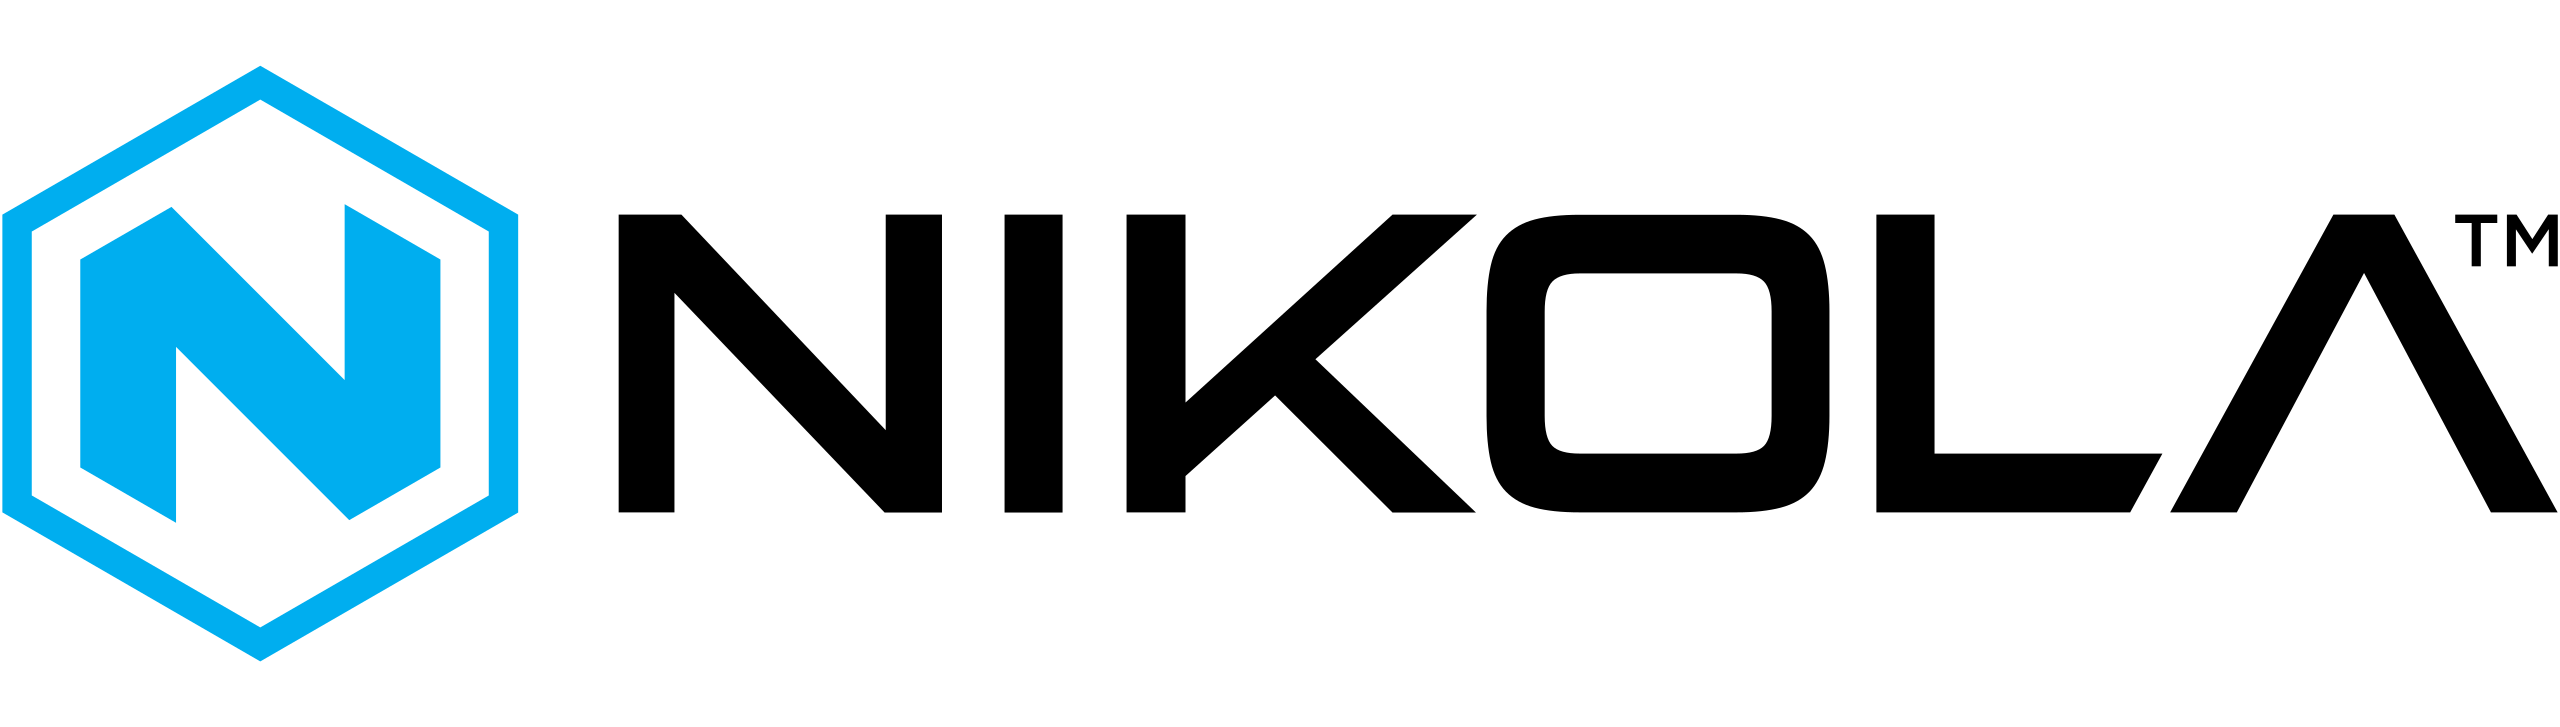 Nikola_logo.svg